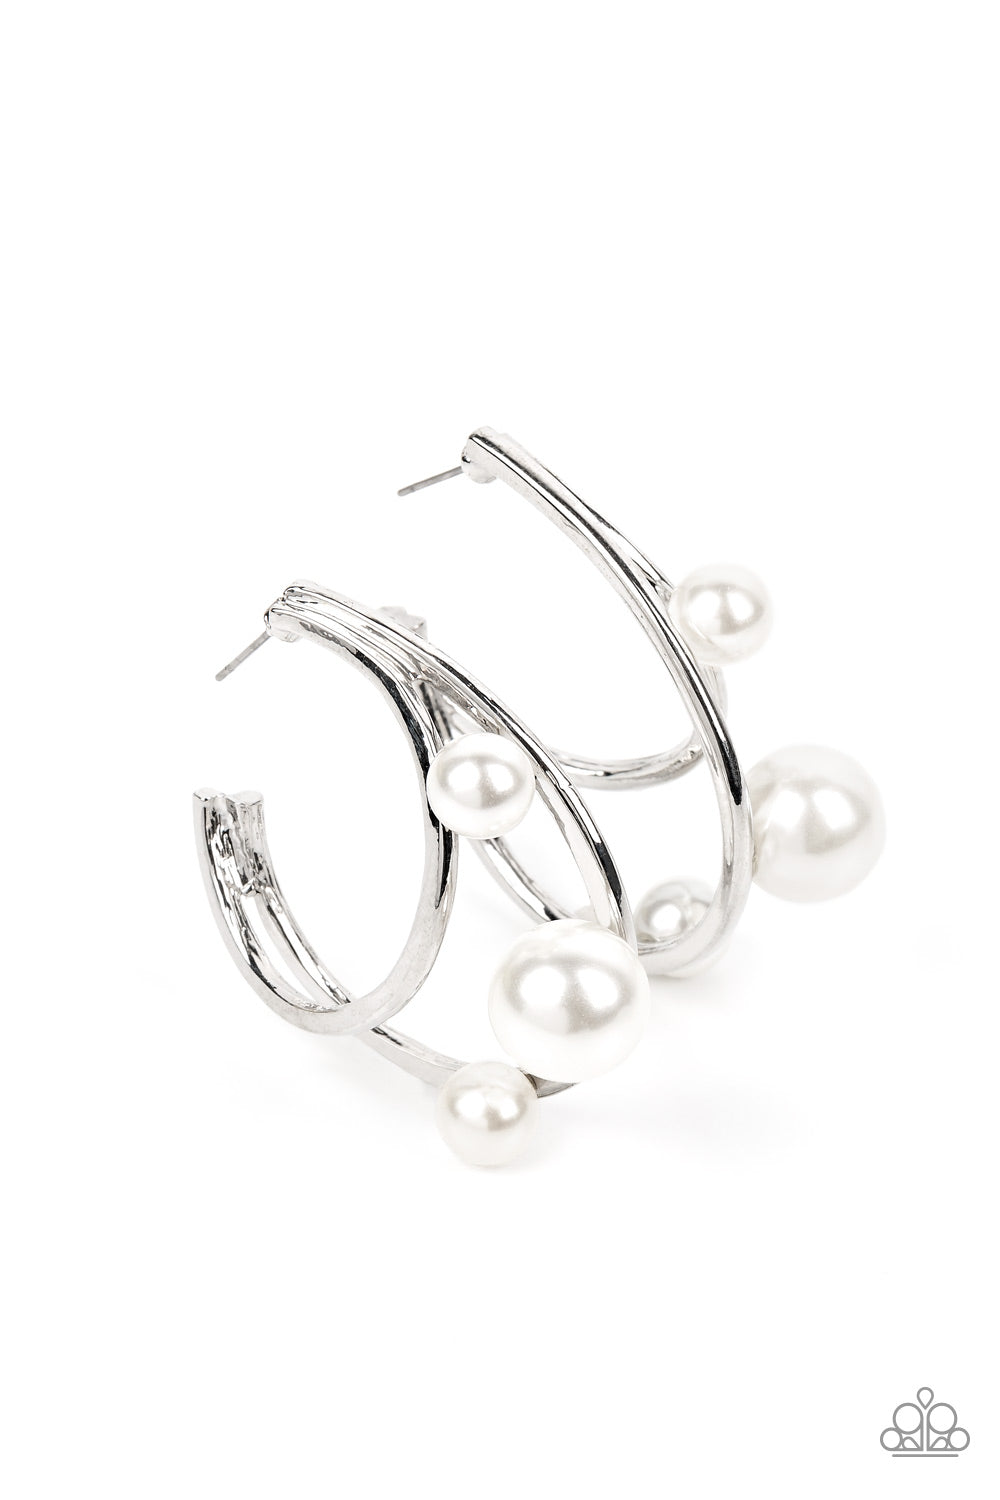 Metro Pier - White Pearl & Curved Silver Bar Paparazzi Hoop Earrings